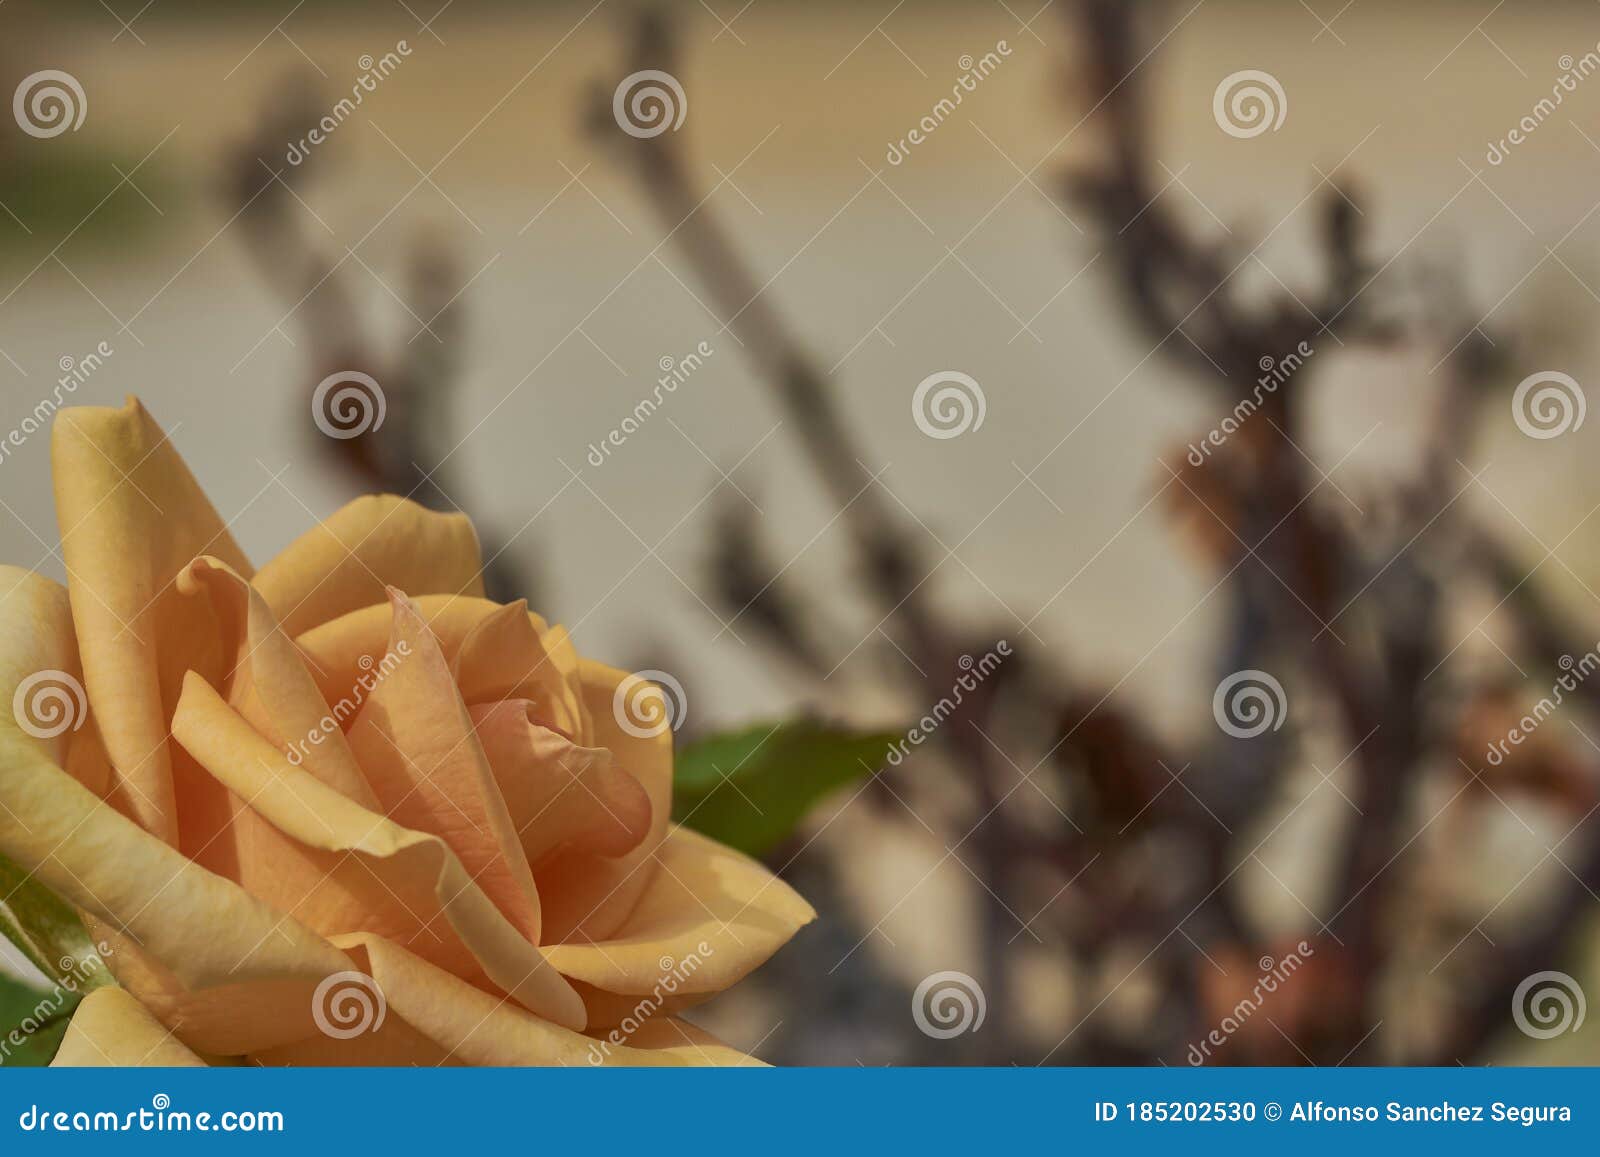 dark yellow rose in left bottom corner